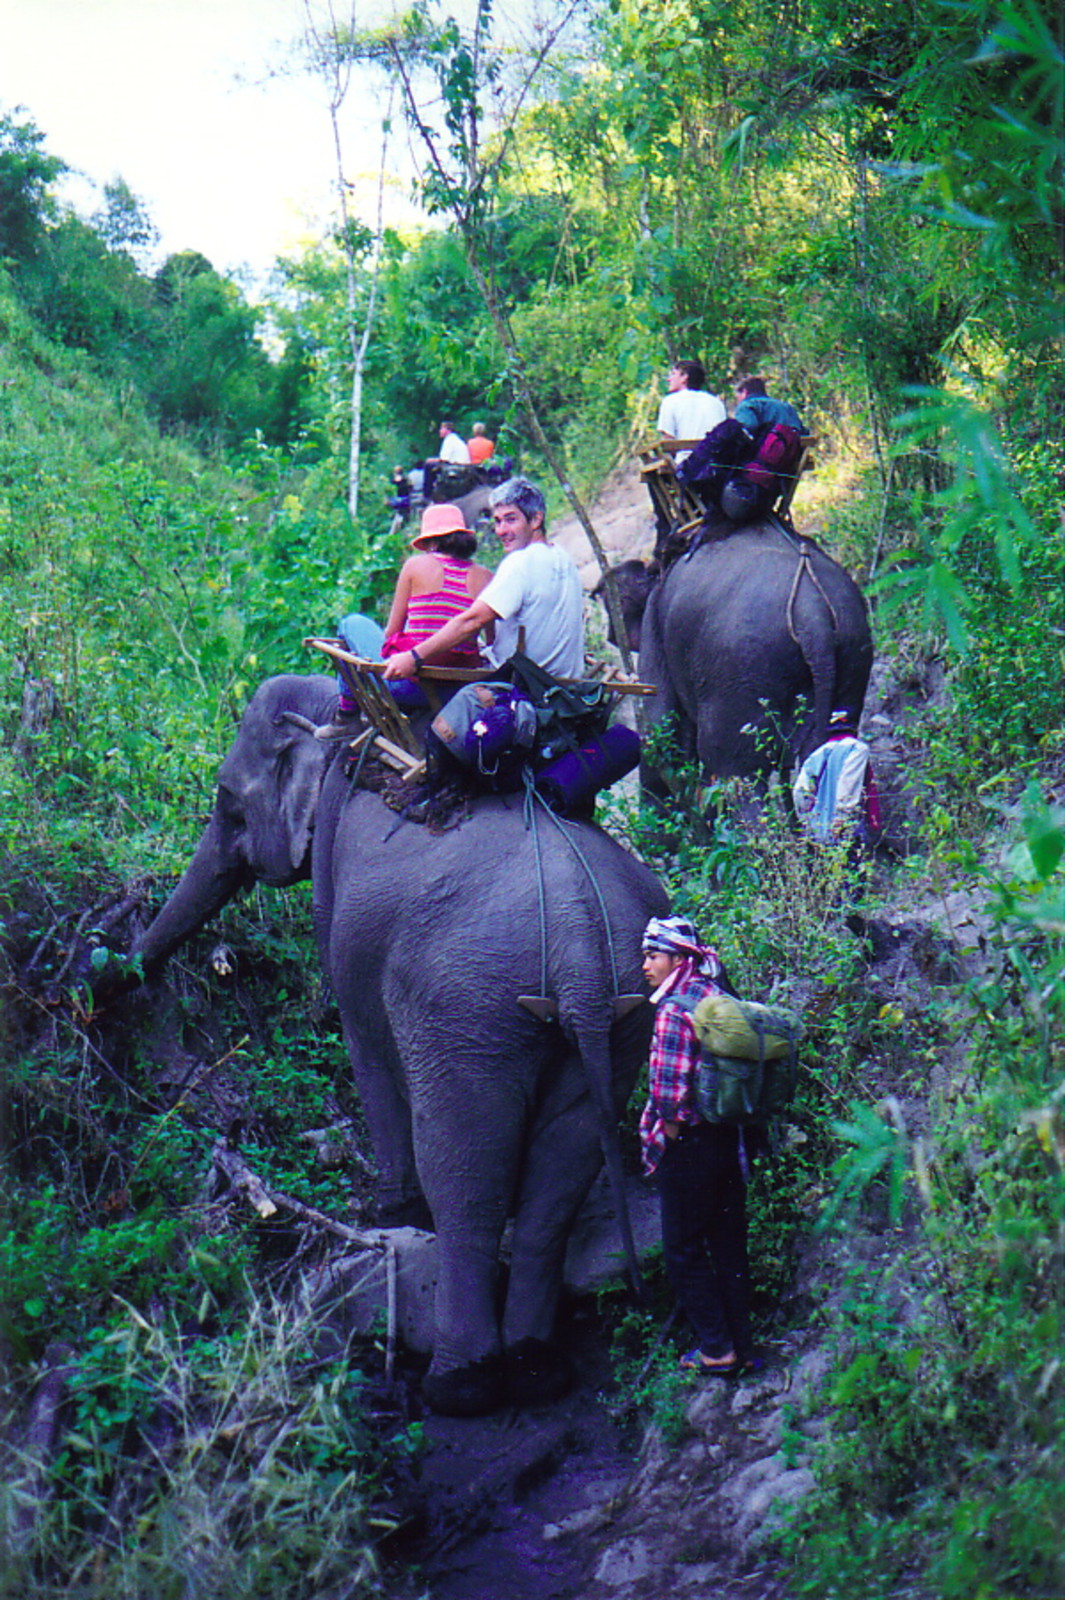 Elephant trekking near Chiang Mai